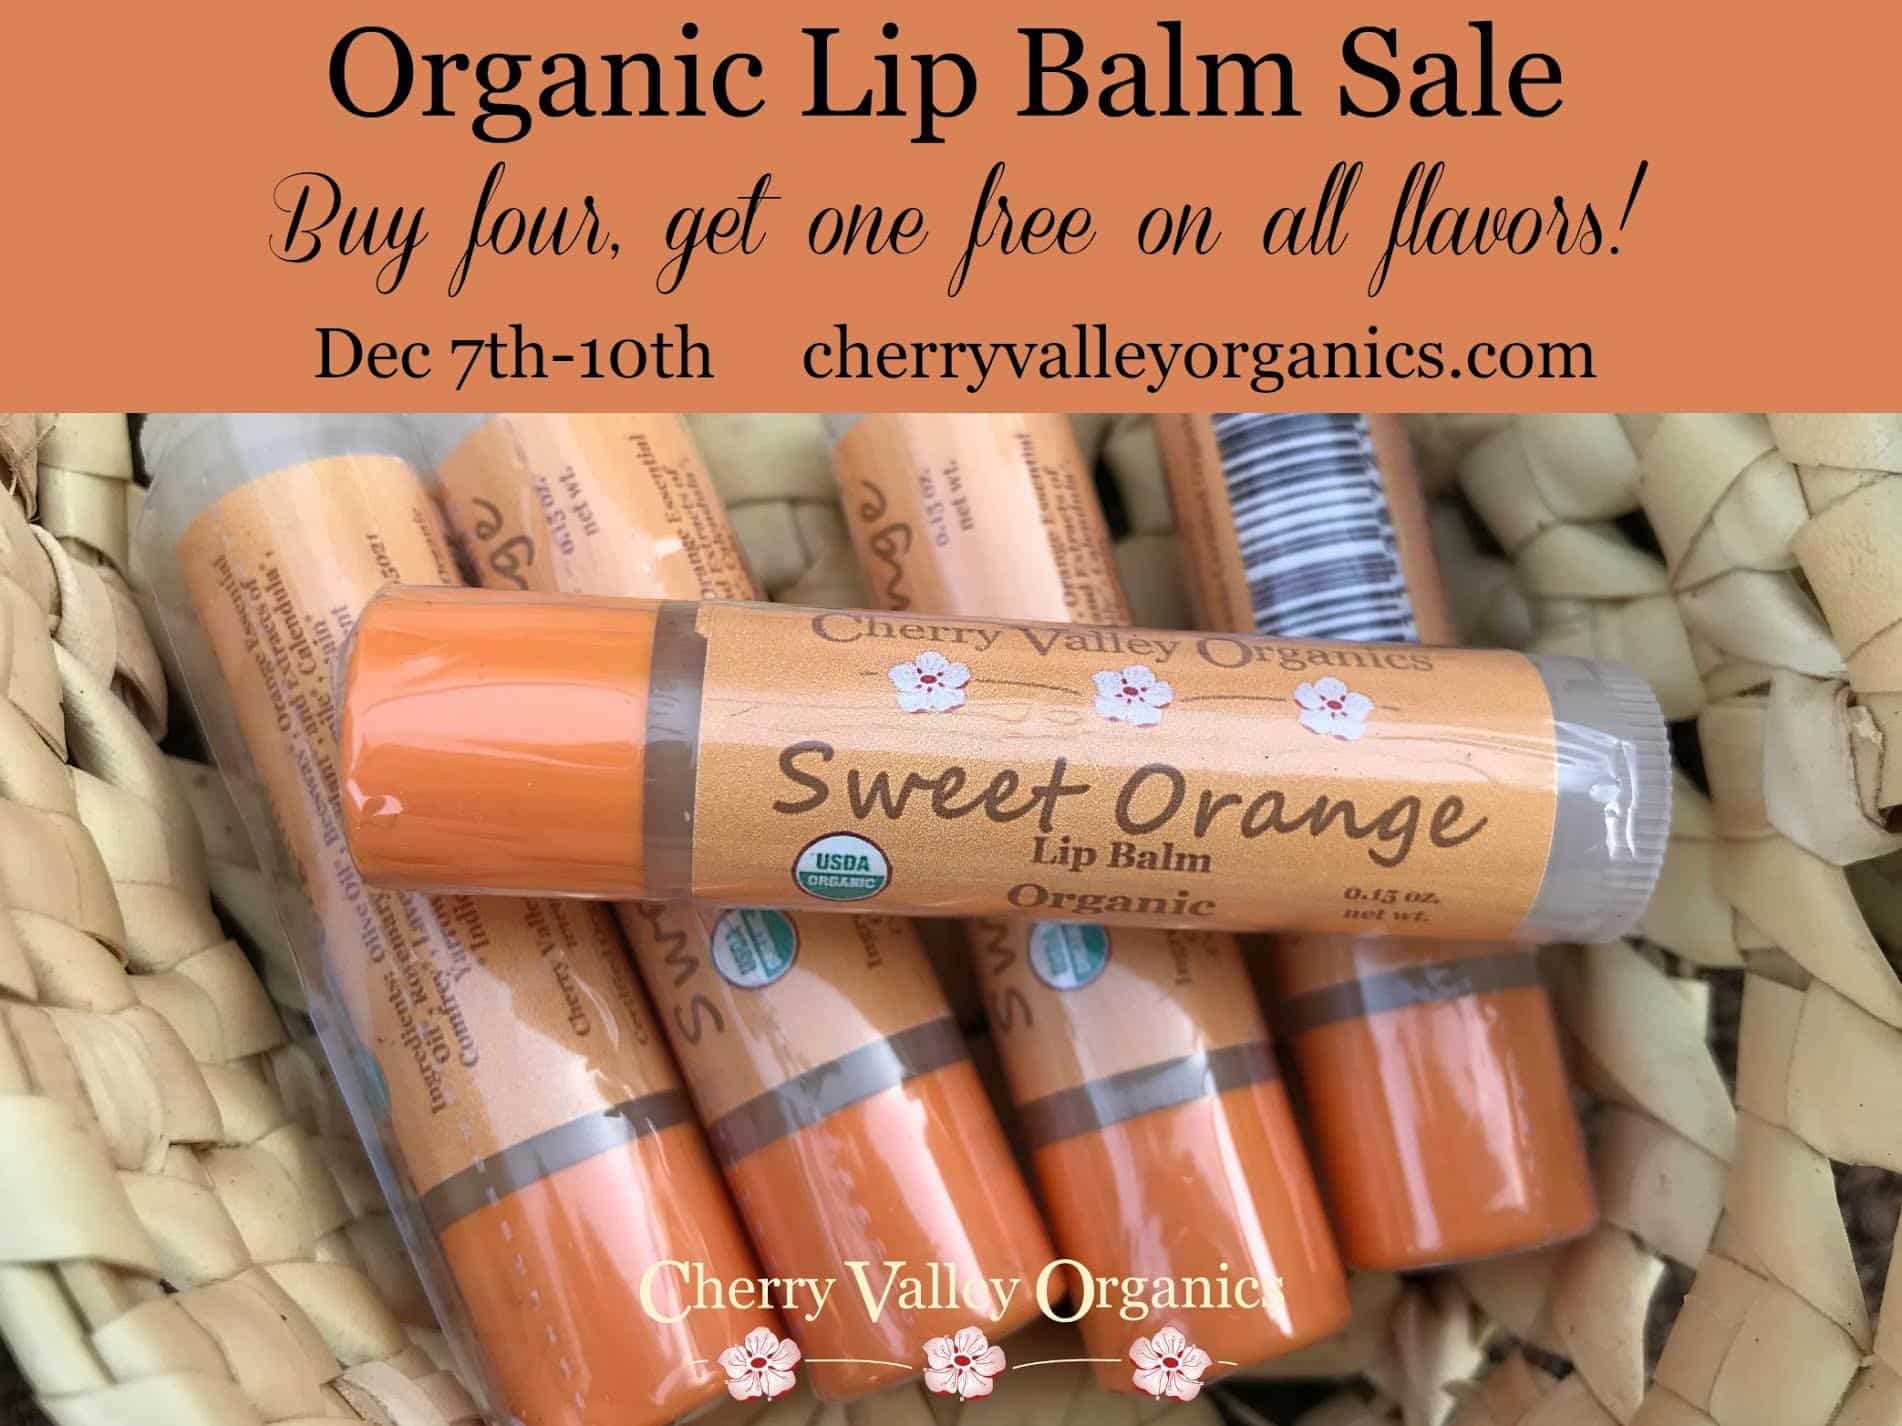 Cherry Valley Organics Lip Balm Sale